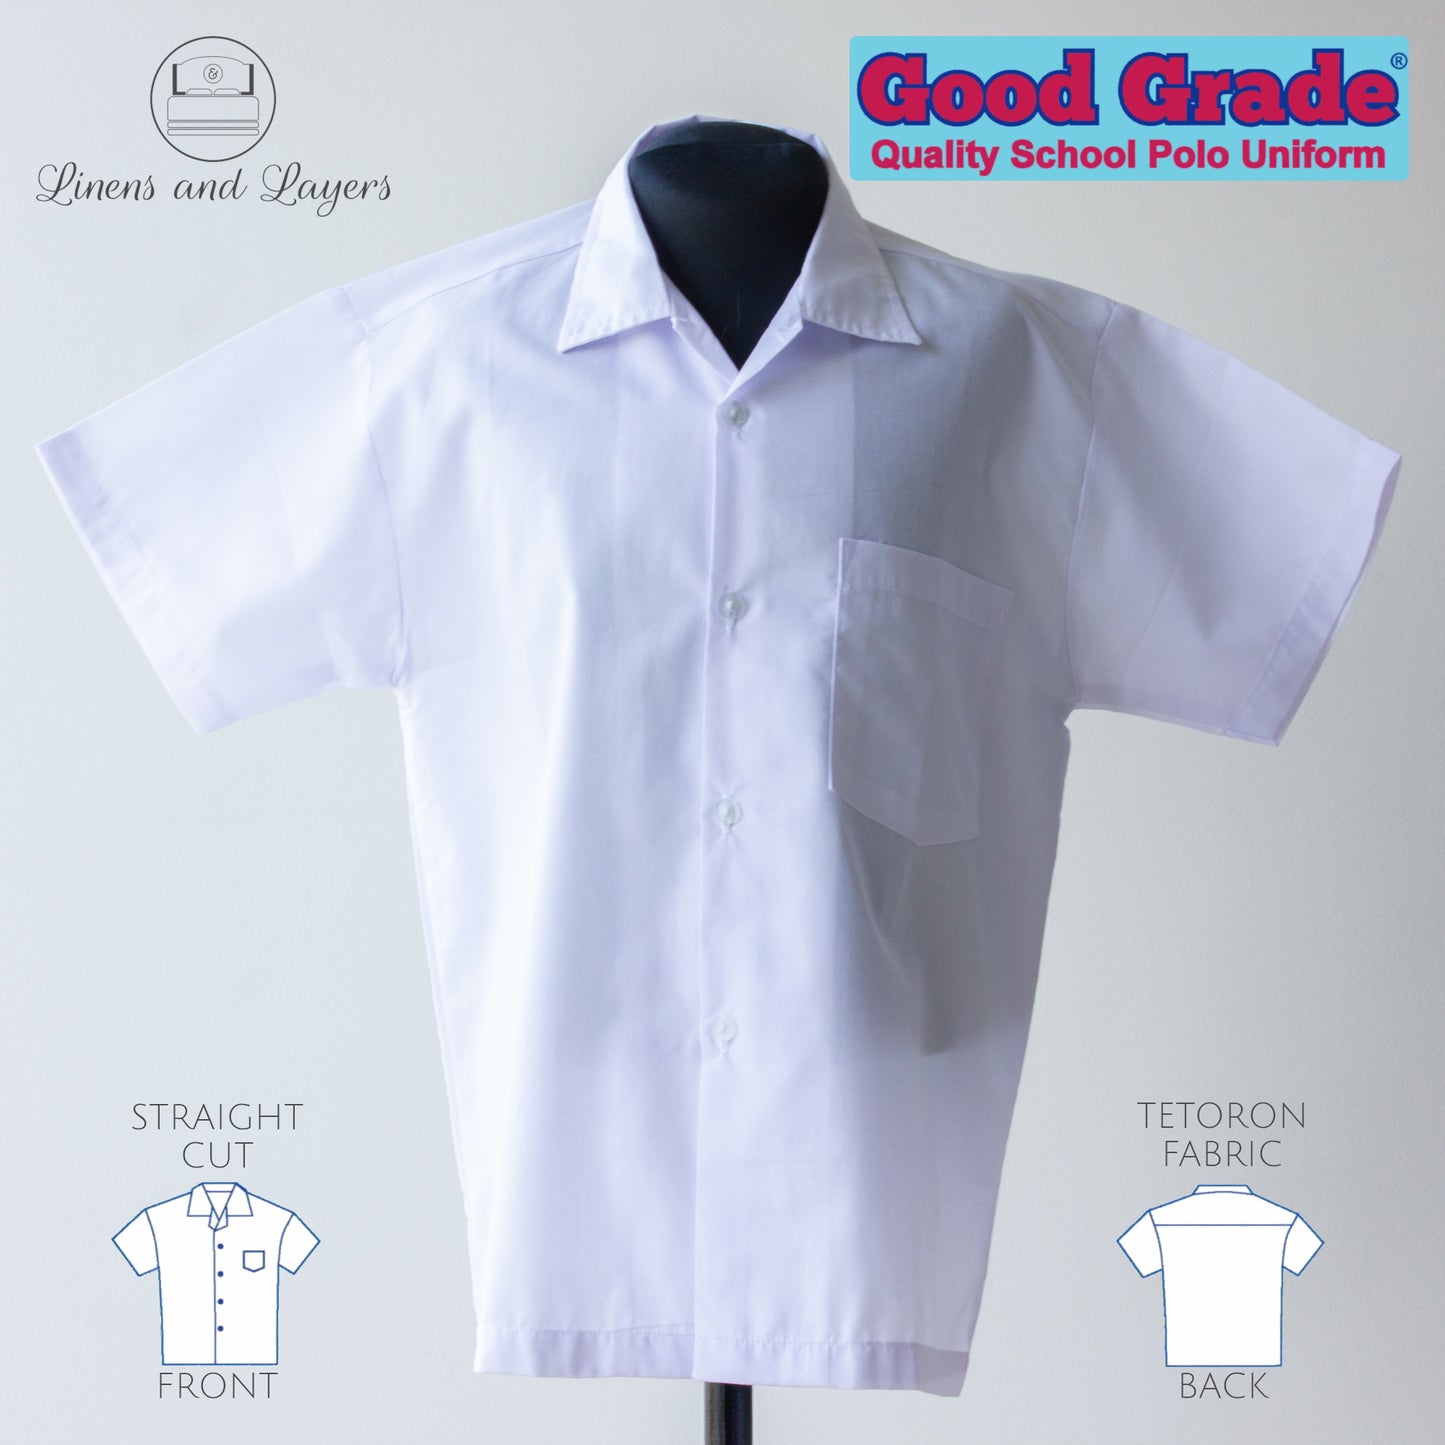 Good Grade Unisex Classic School Polo Uniform - Straight Cut - Tetoron